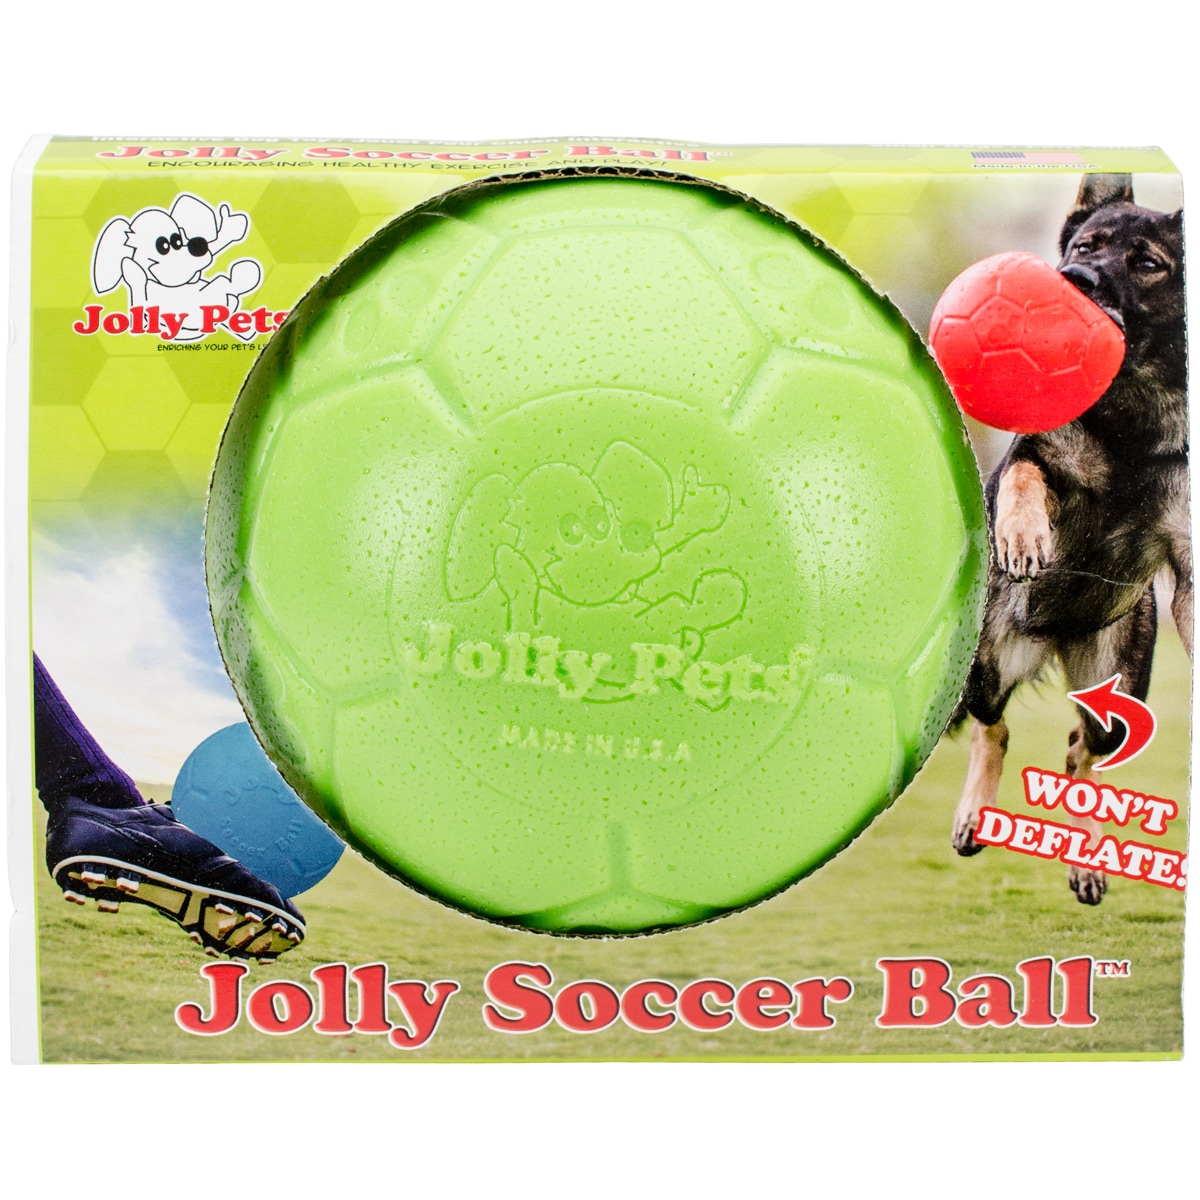 jolly soccer ball dog toy